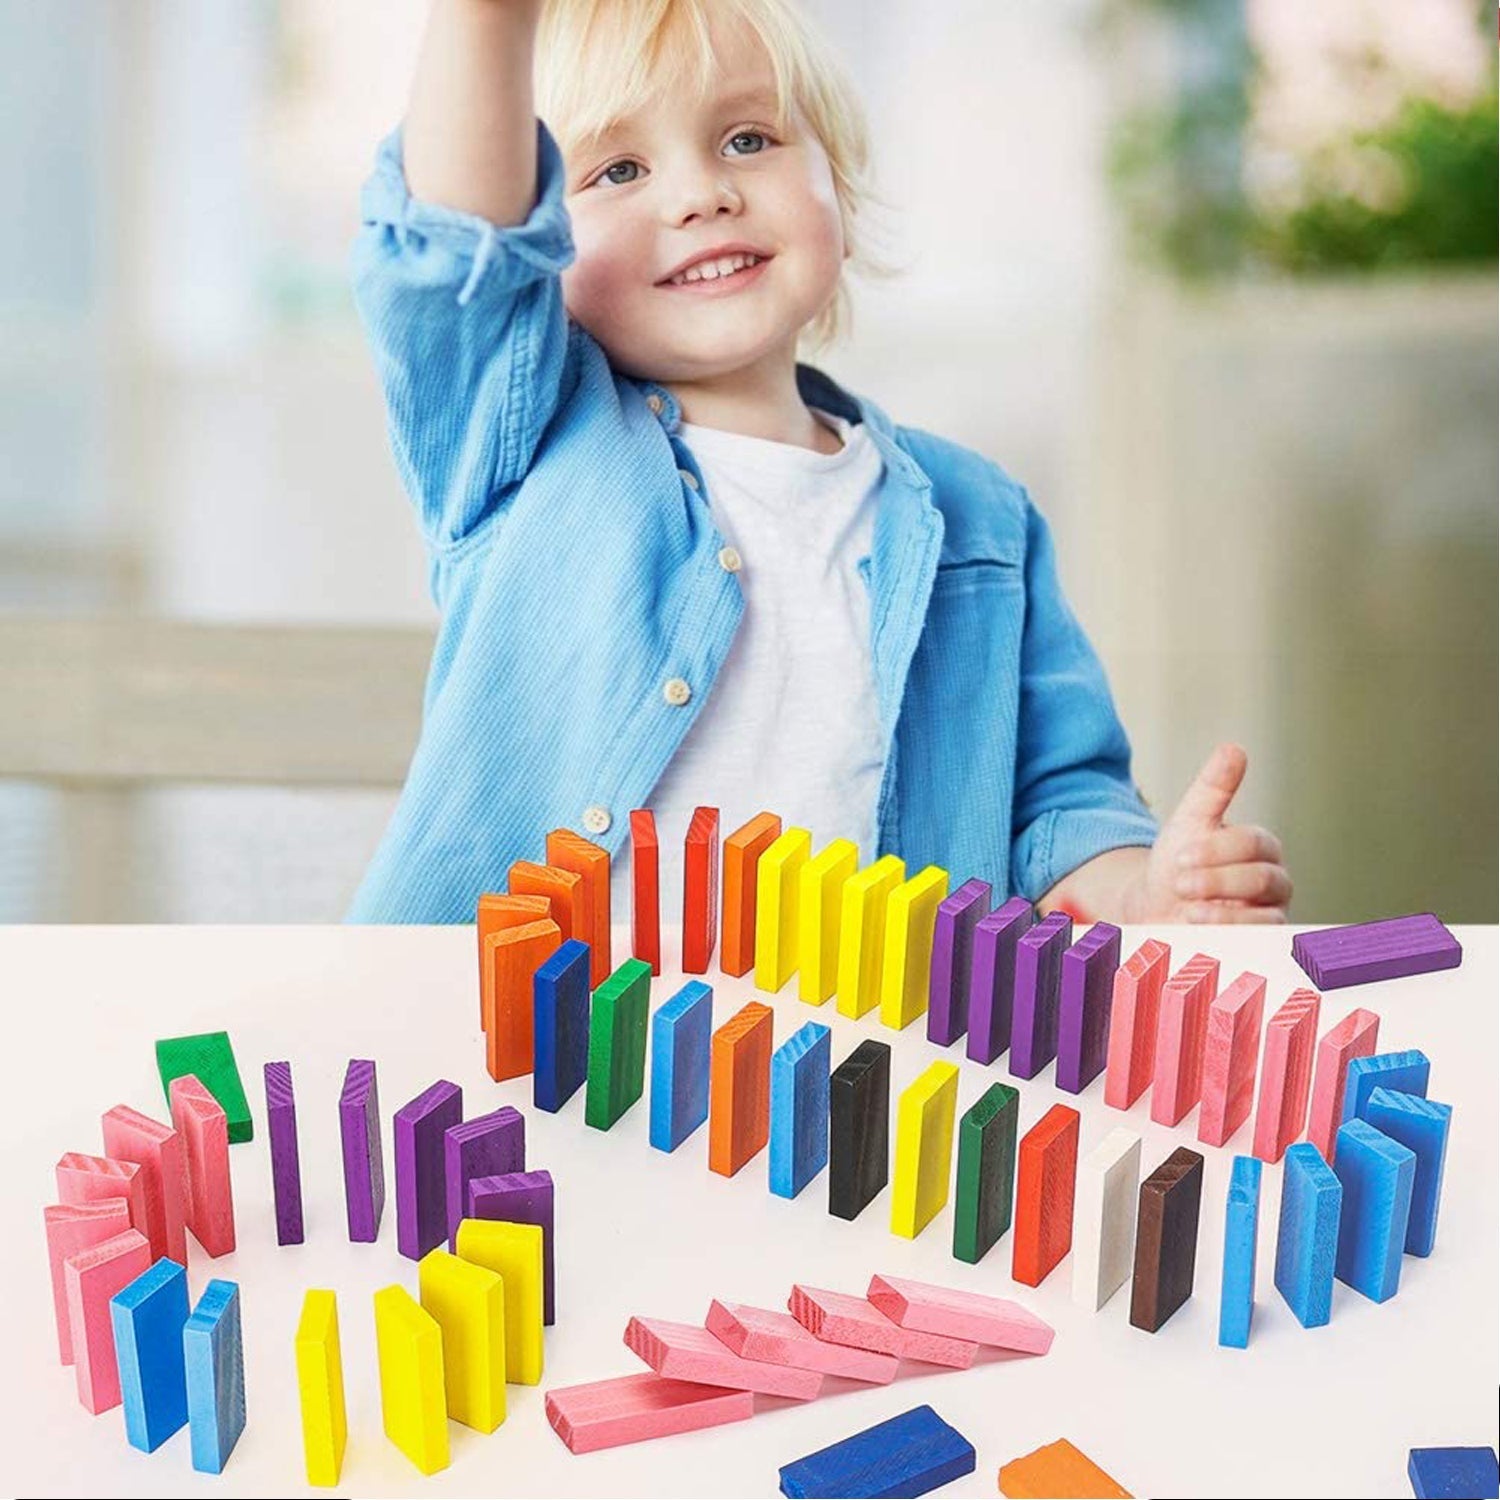 4439 120Pc Dominoes Blocks Set Multicolor Wooden Toy Building Indoor Game Toy. DeoDap